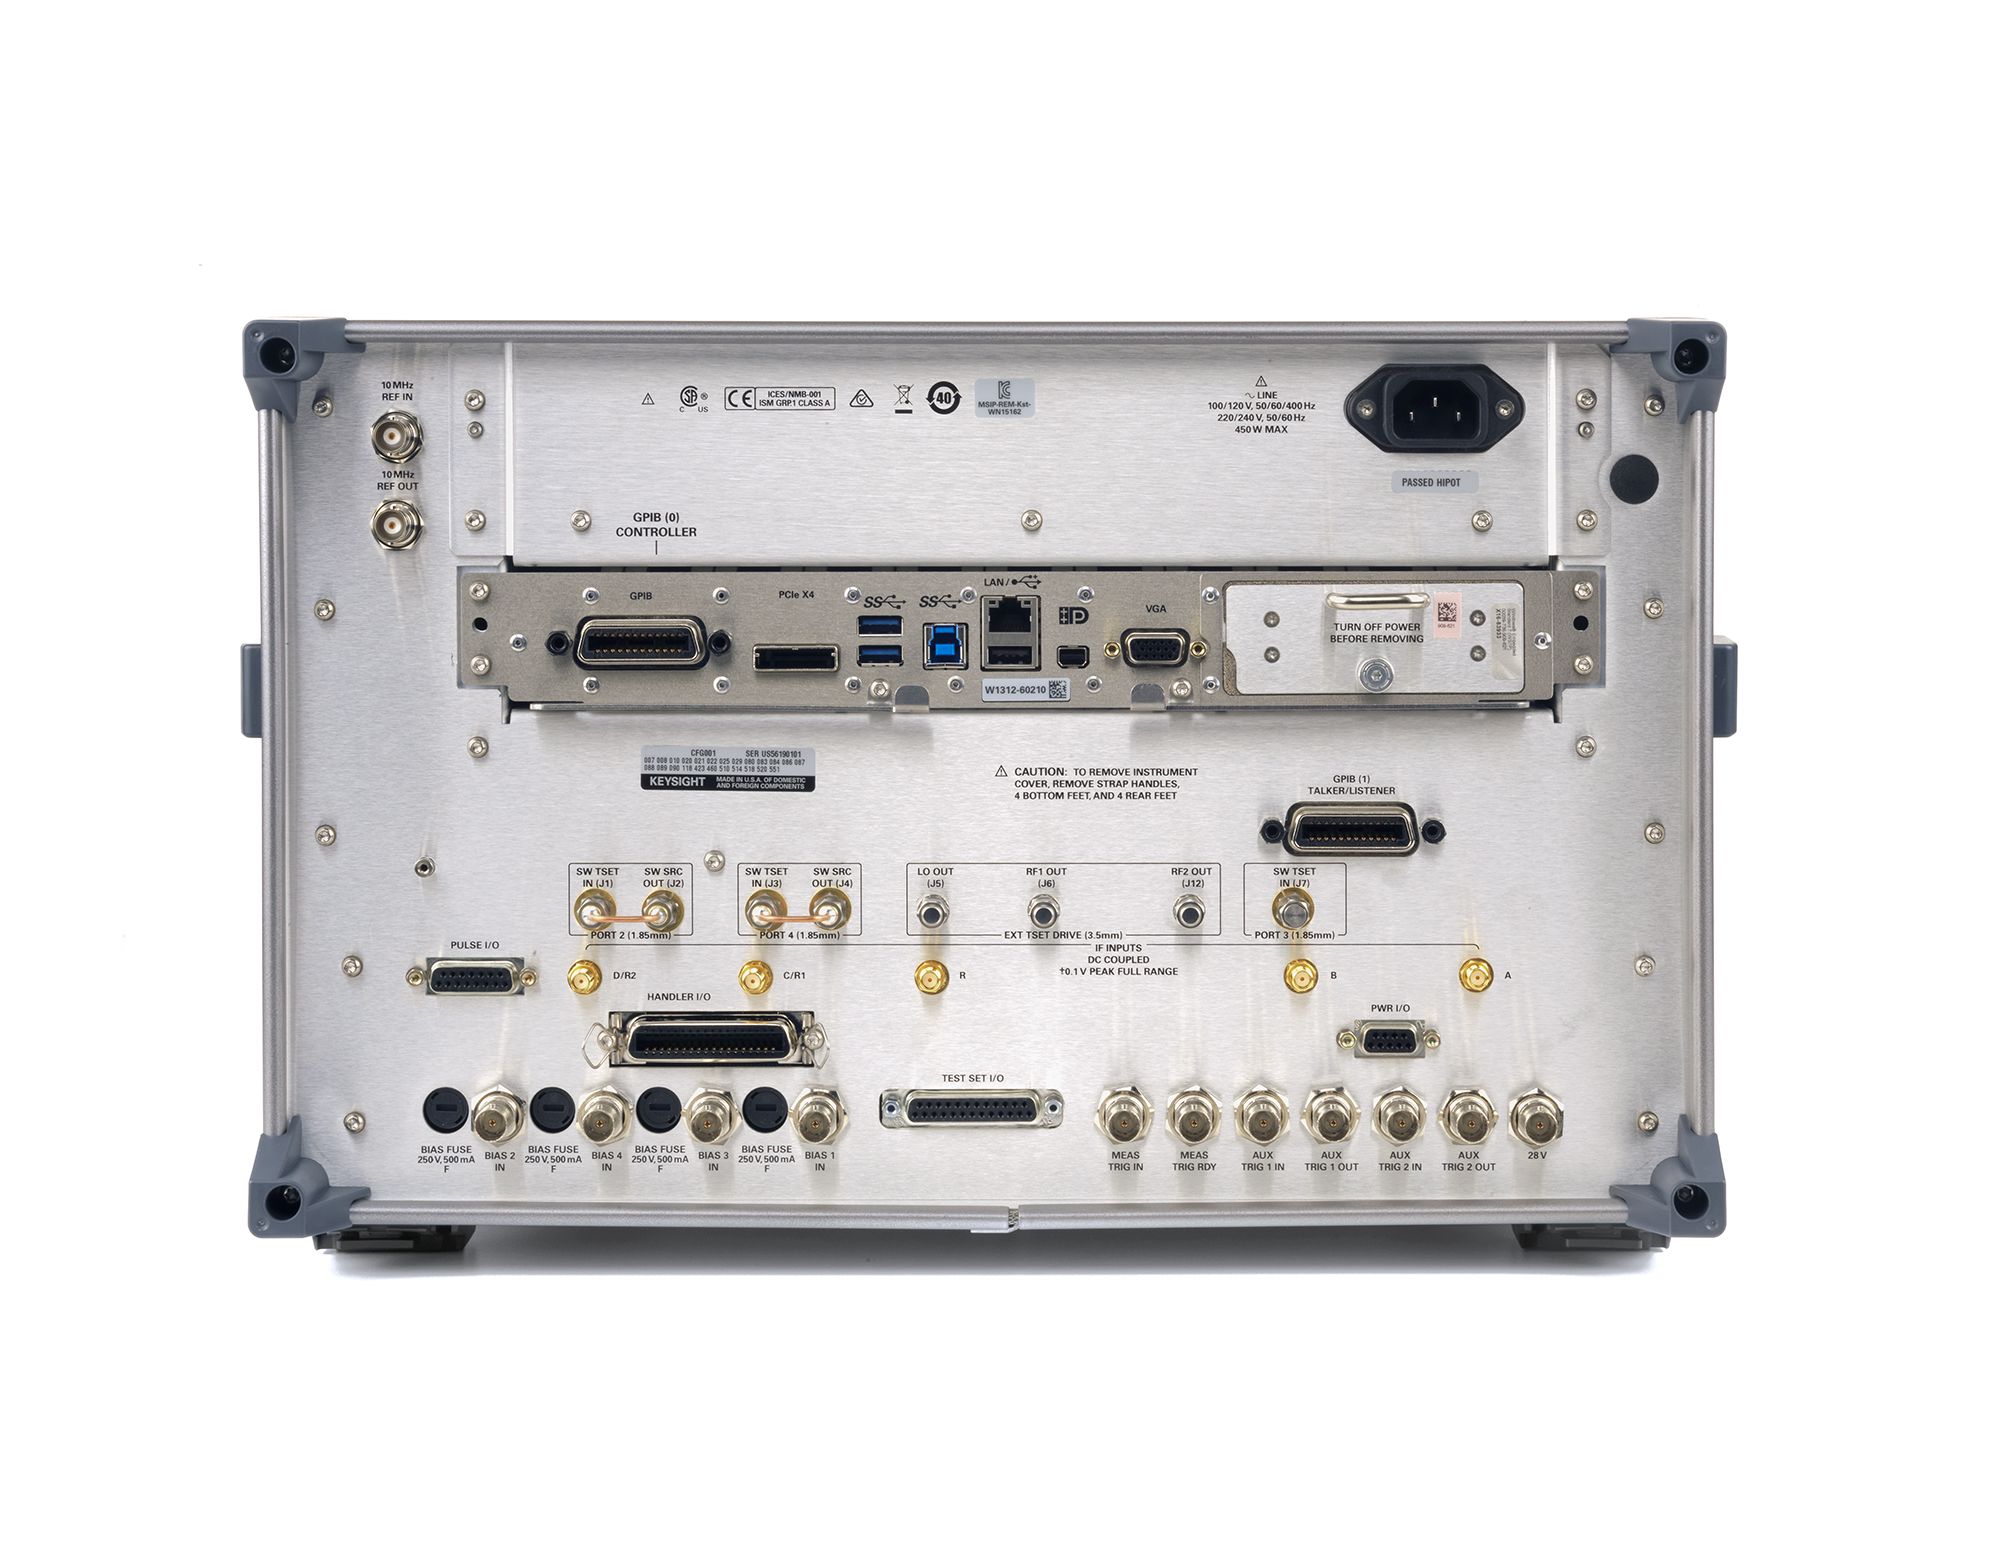 KEYSIGHT N5242B PNA-X 微波网络分析仪